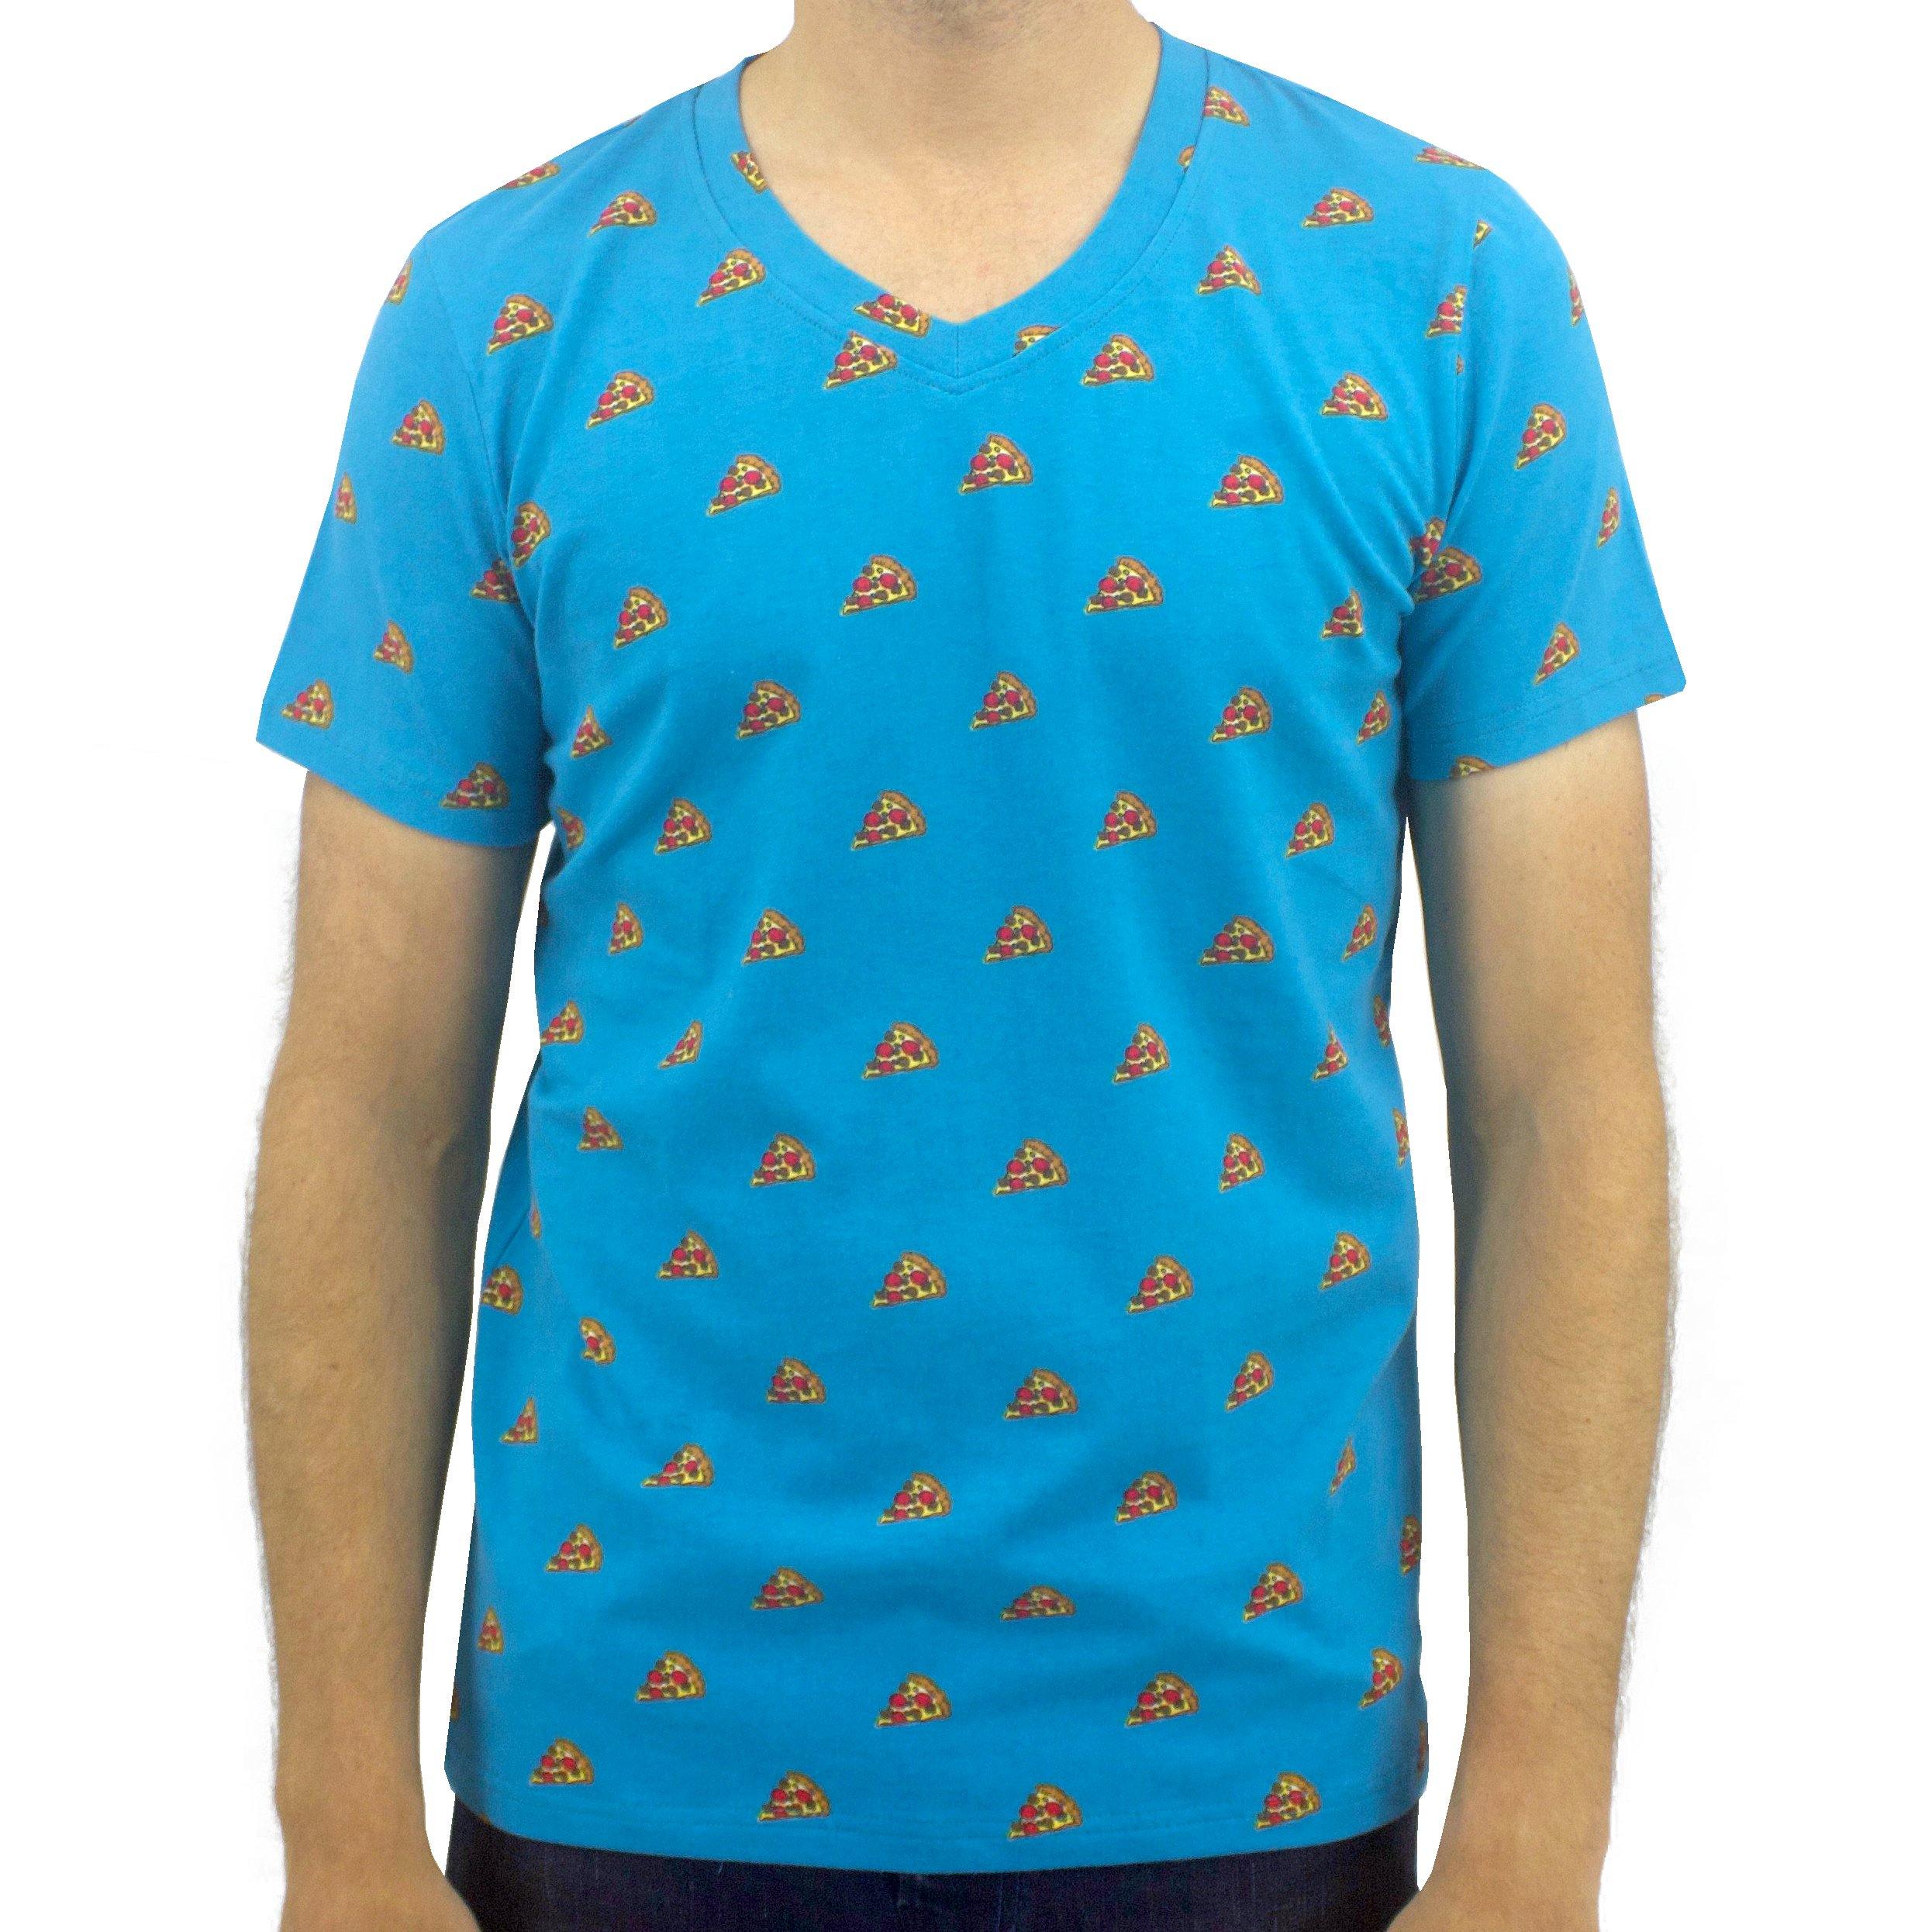 Men's V-Neck Pizza Patterned Soft Cotton T-Shirt for Pizza Lovers